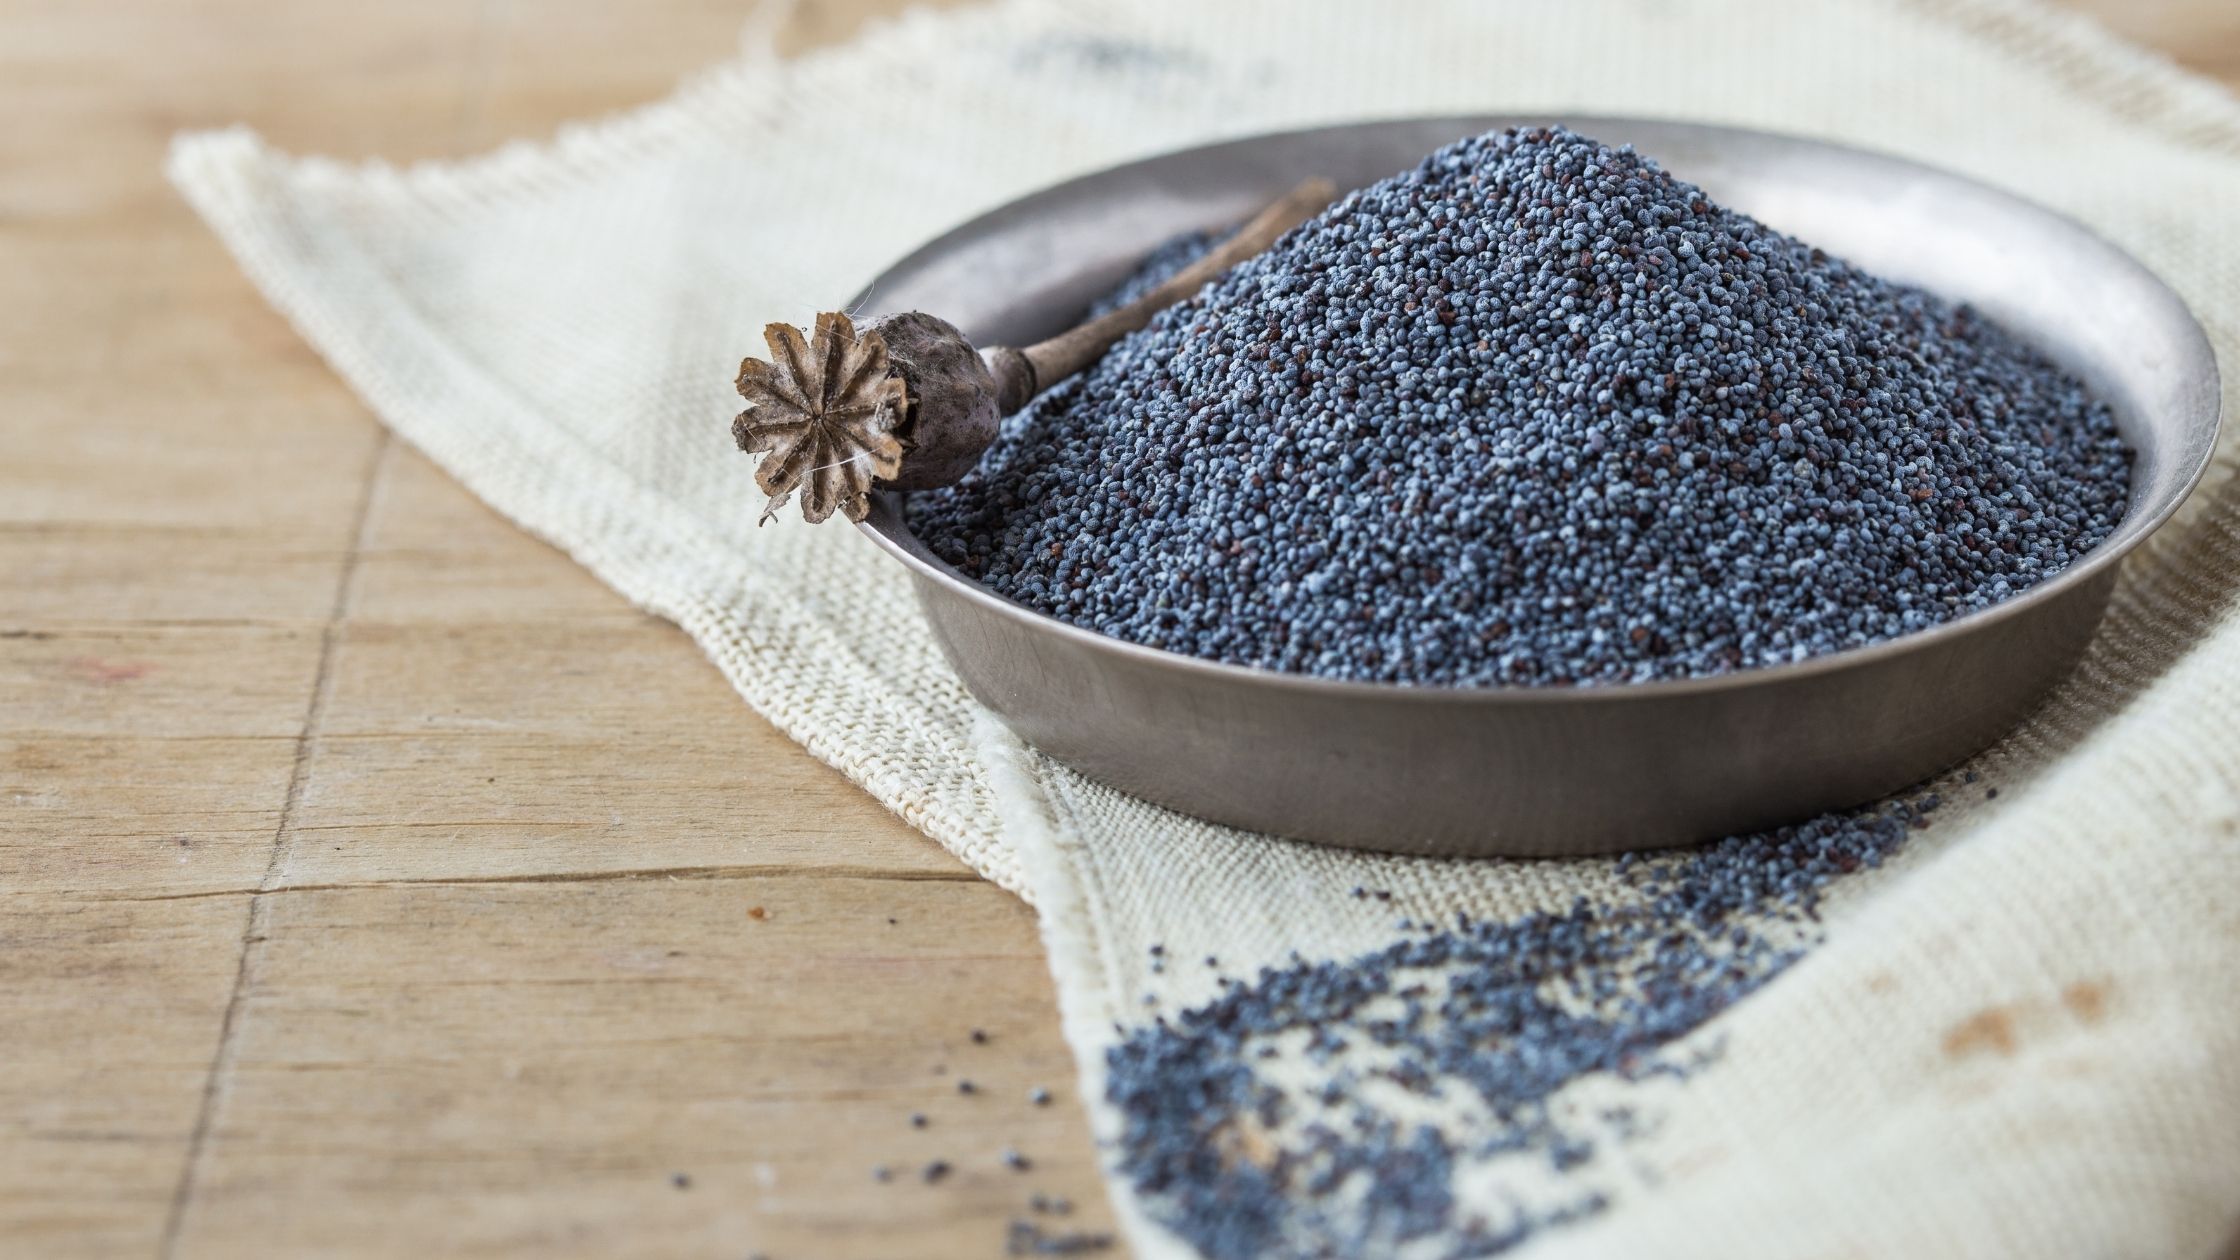 Health Benefits of Blue Poppy Seeds